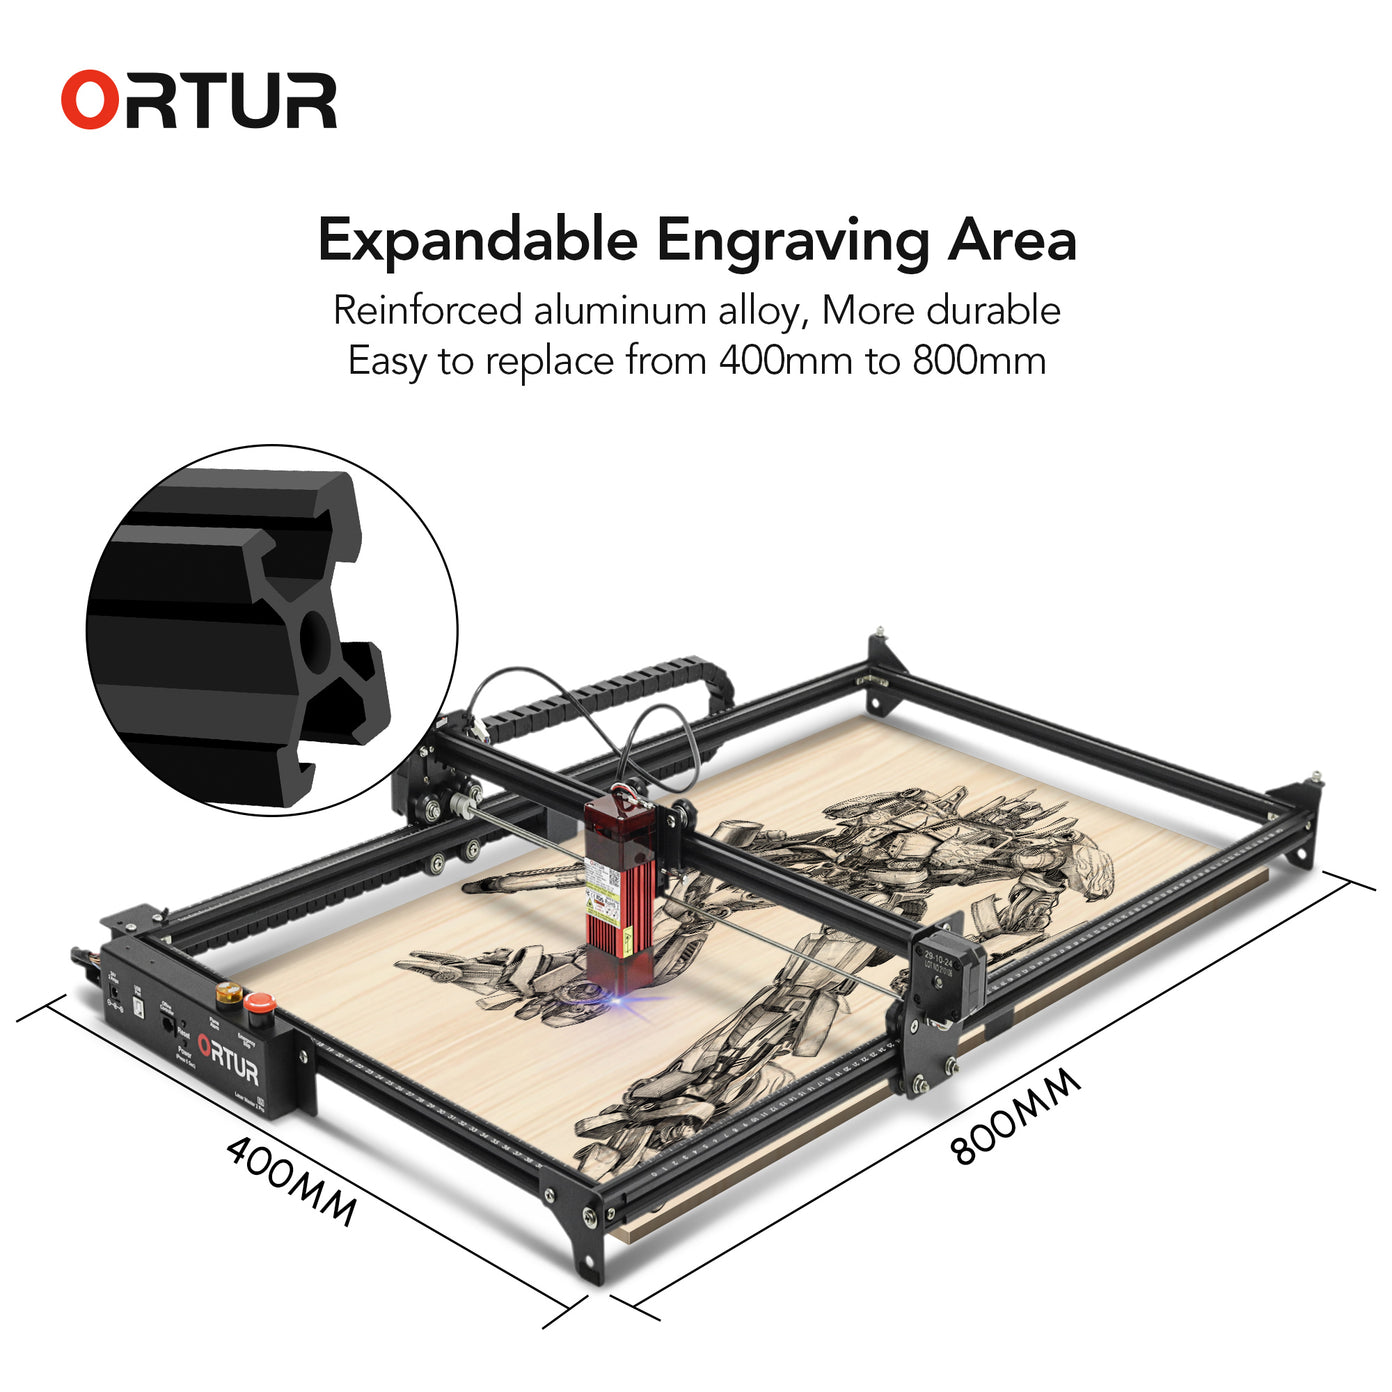 Ortur Extension Kit For Ortur Laser Master 2 Pro S2